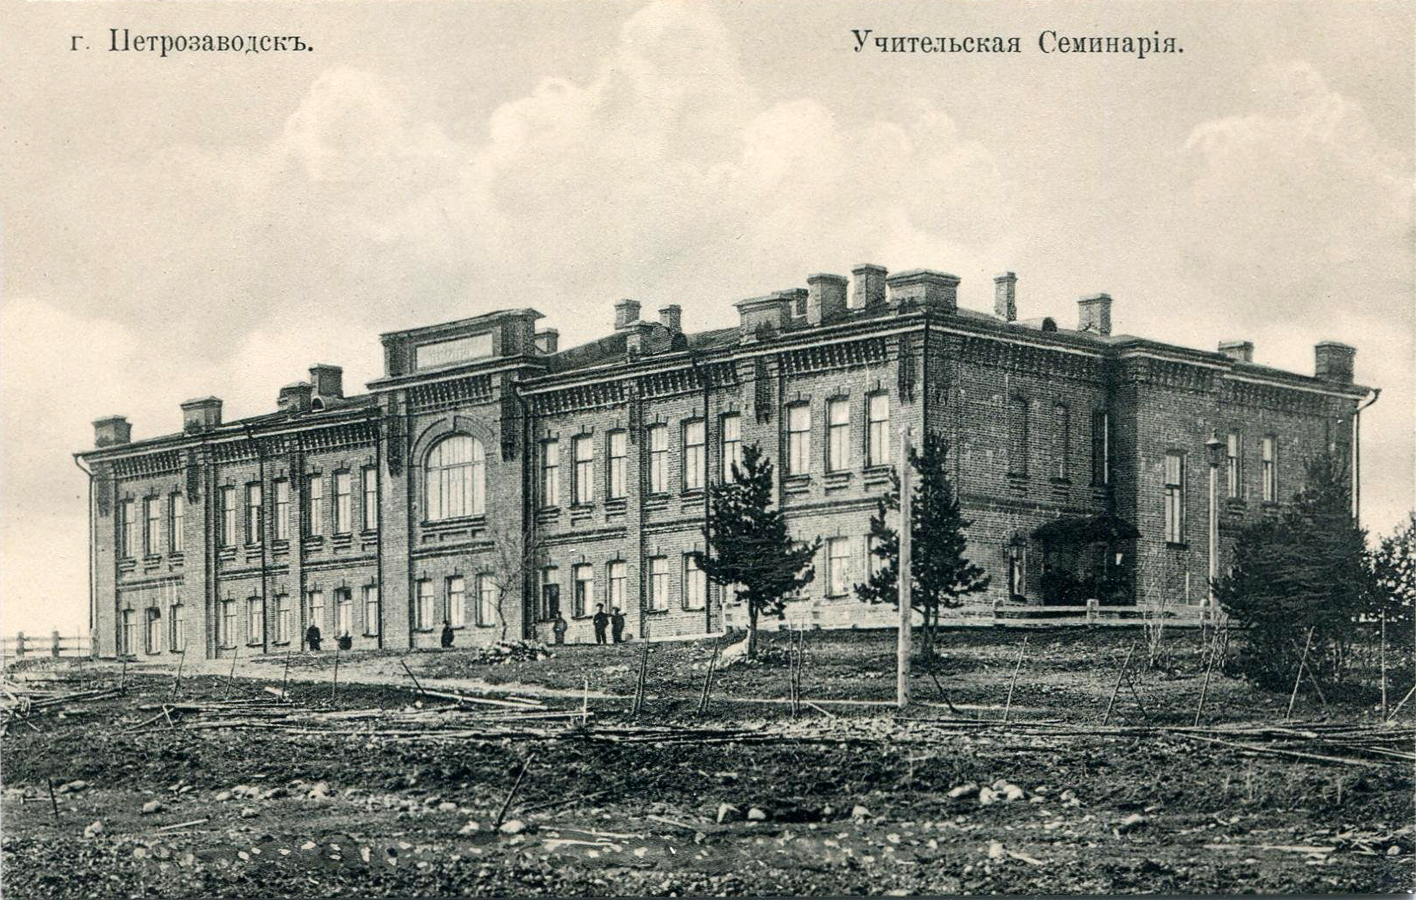 1910's. Petrozavodsk. Building of teacher's seminary